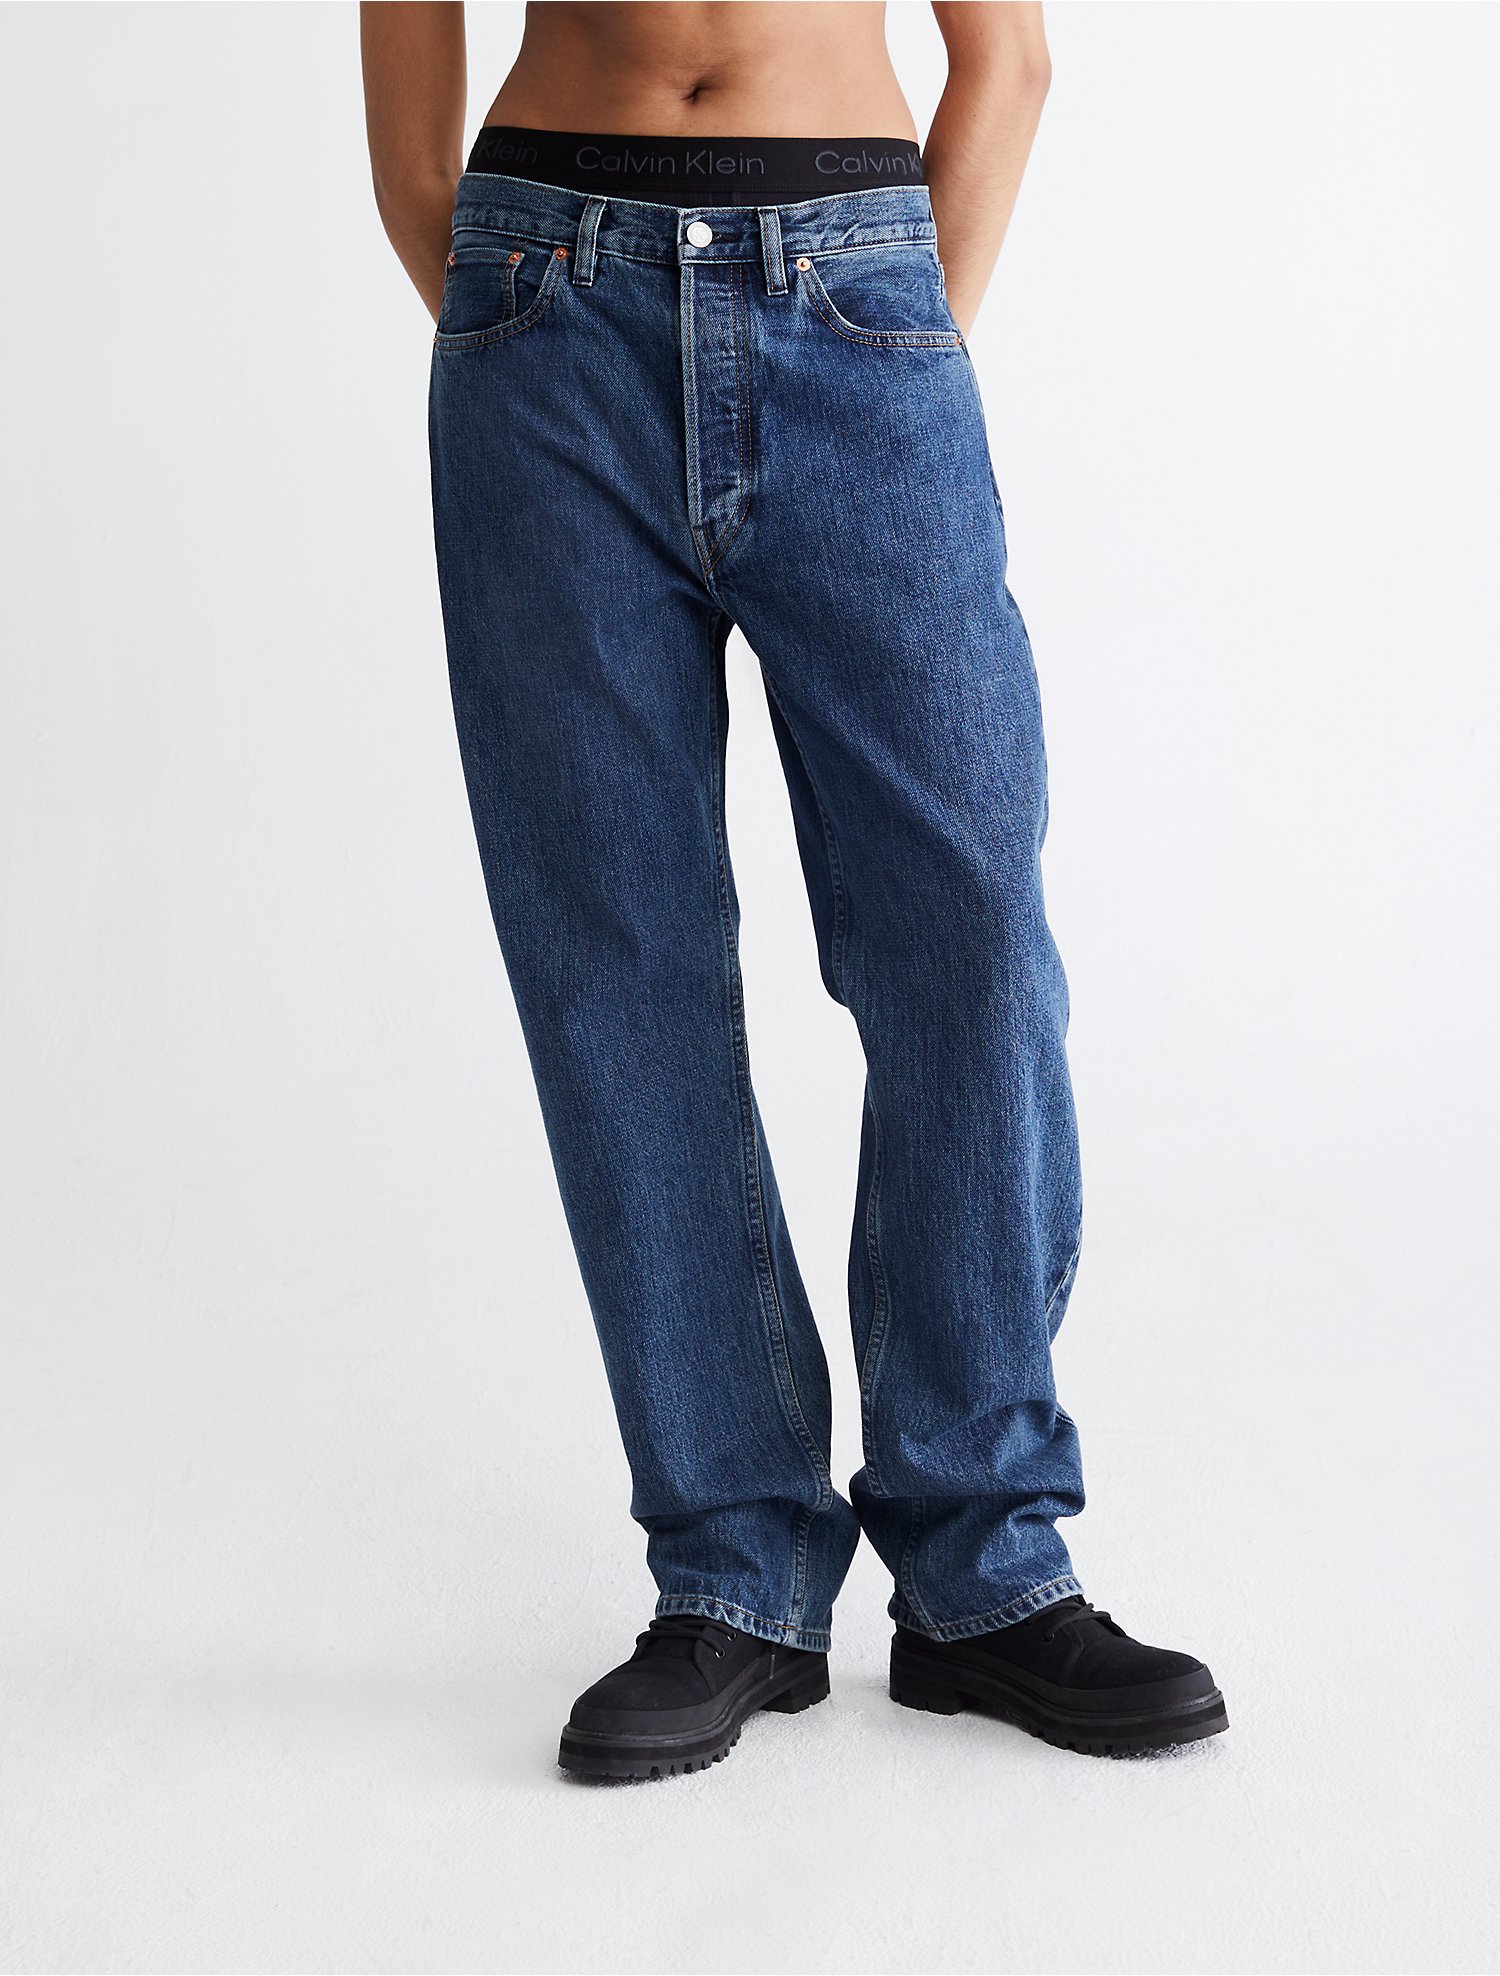 Introducir 81+ imagen calvin klein straight fit jeans